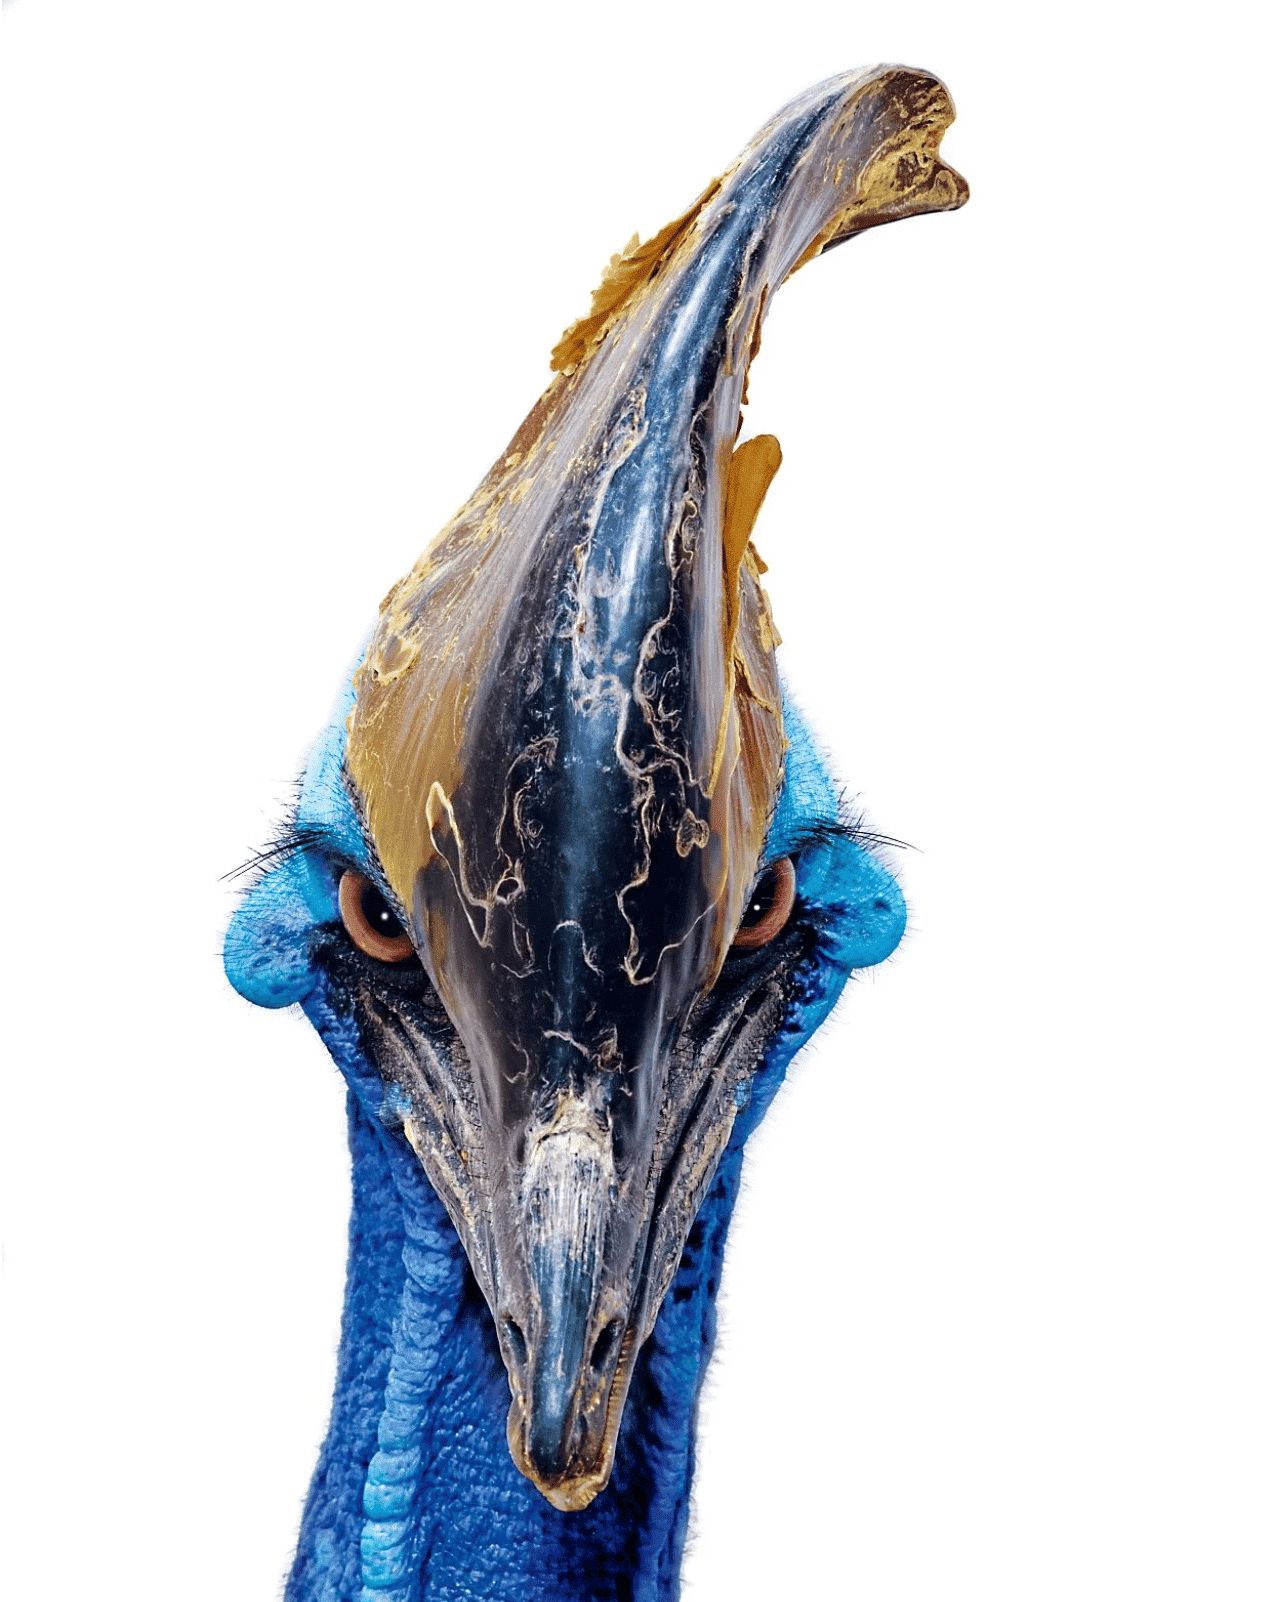 A close-up of a cassowary's face 